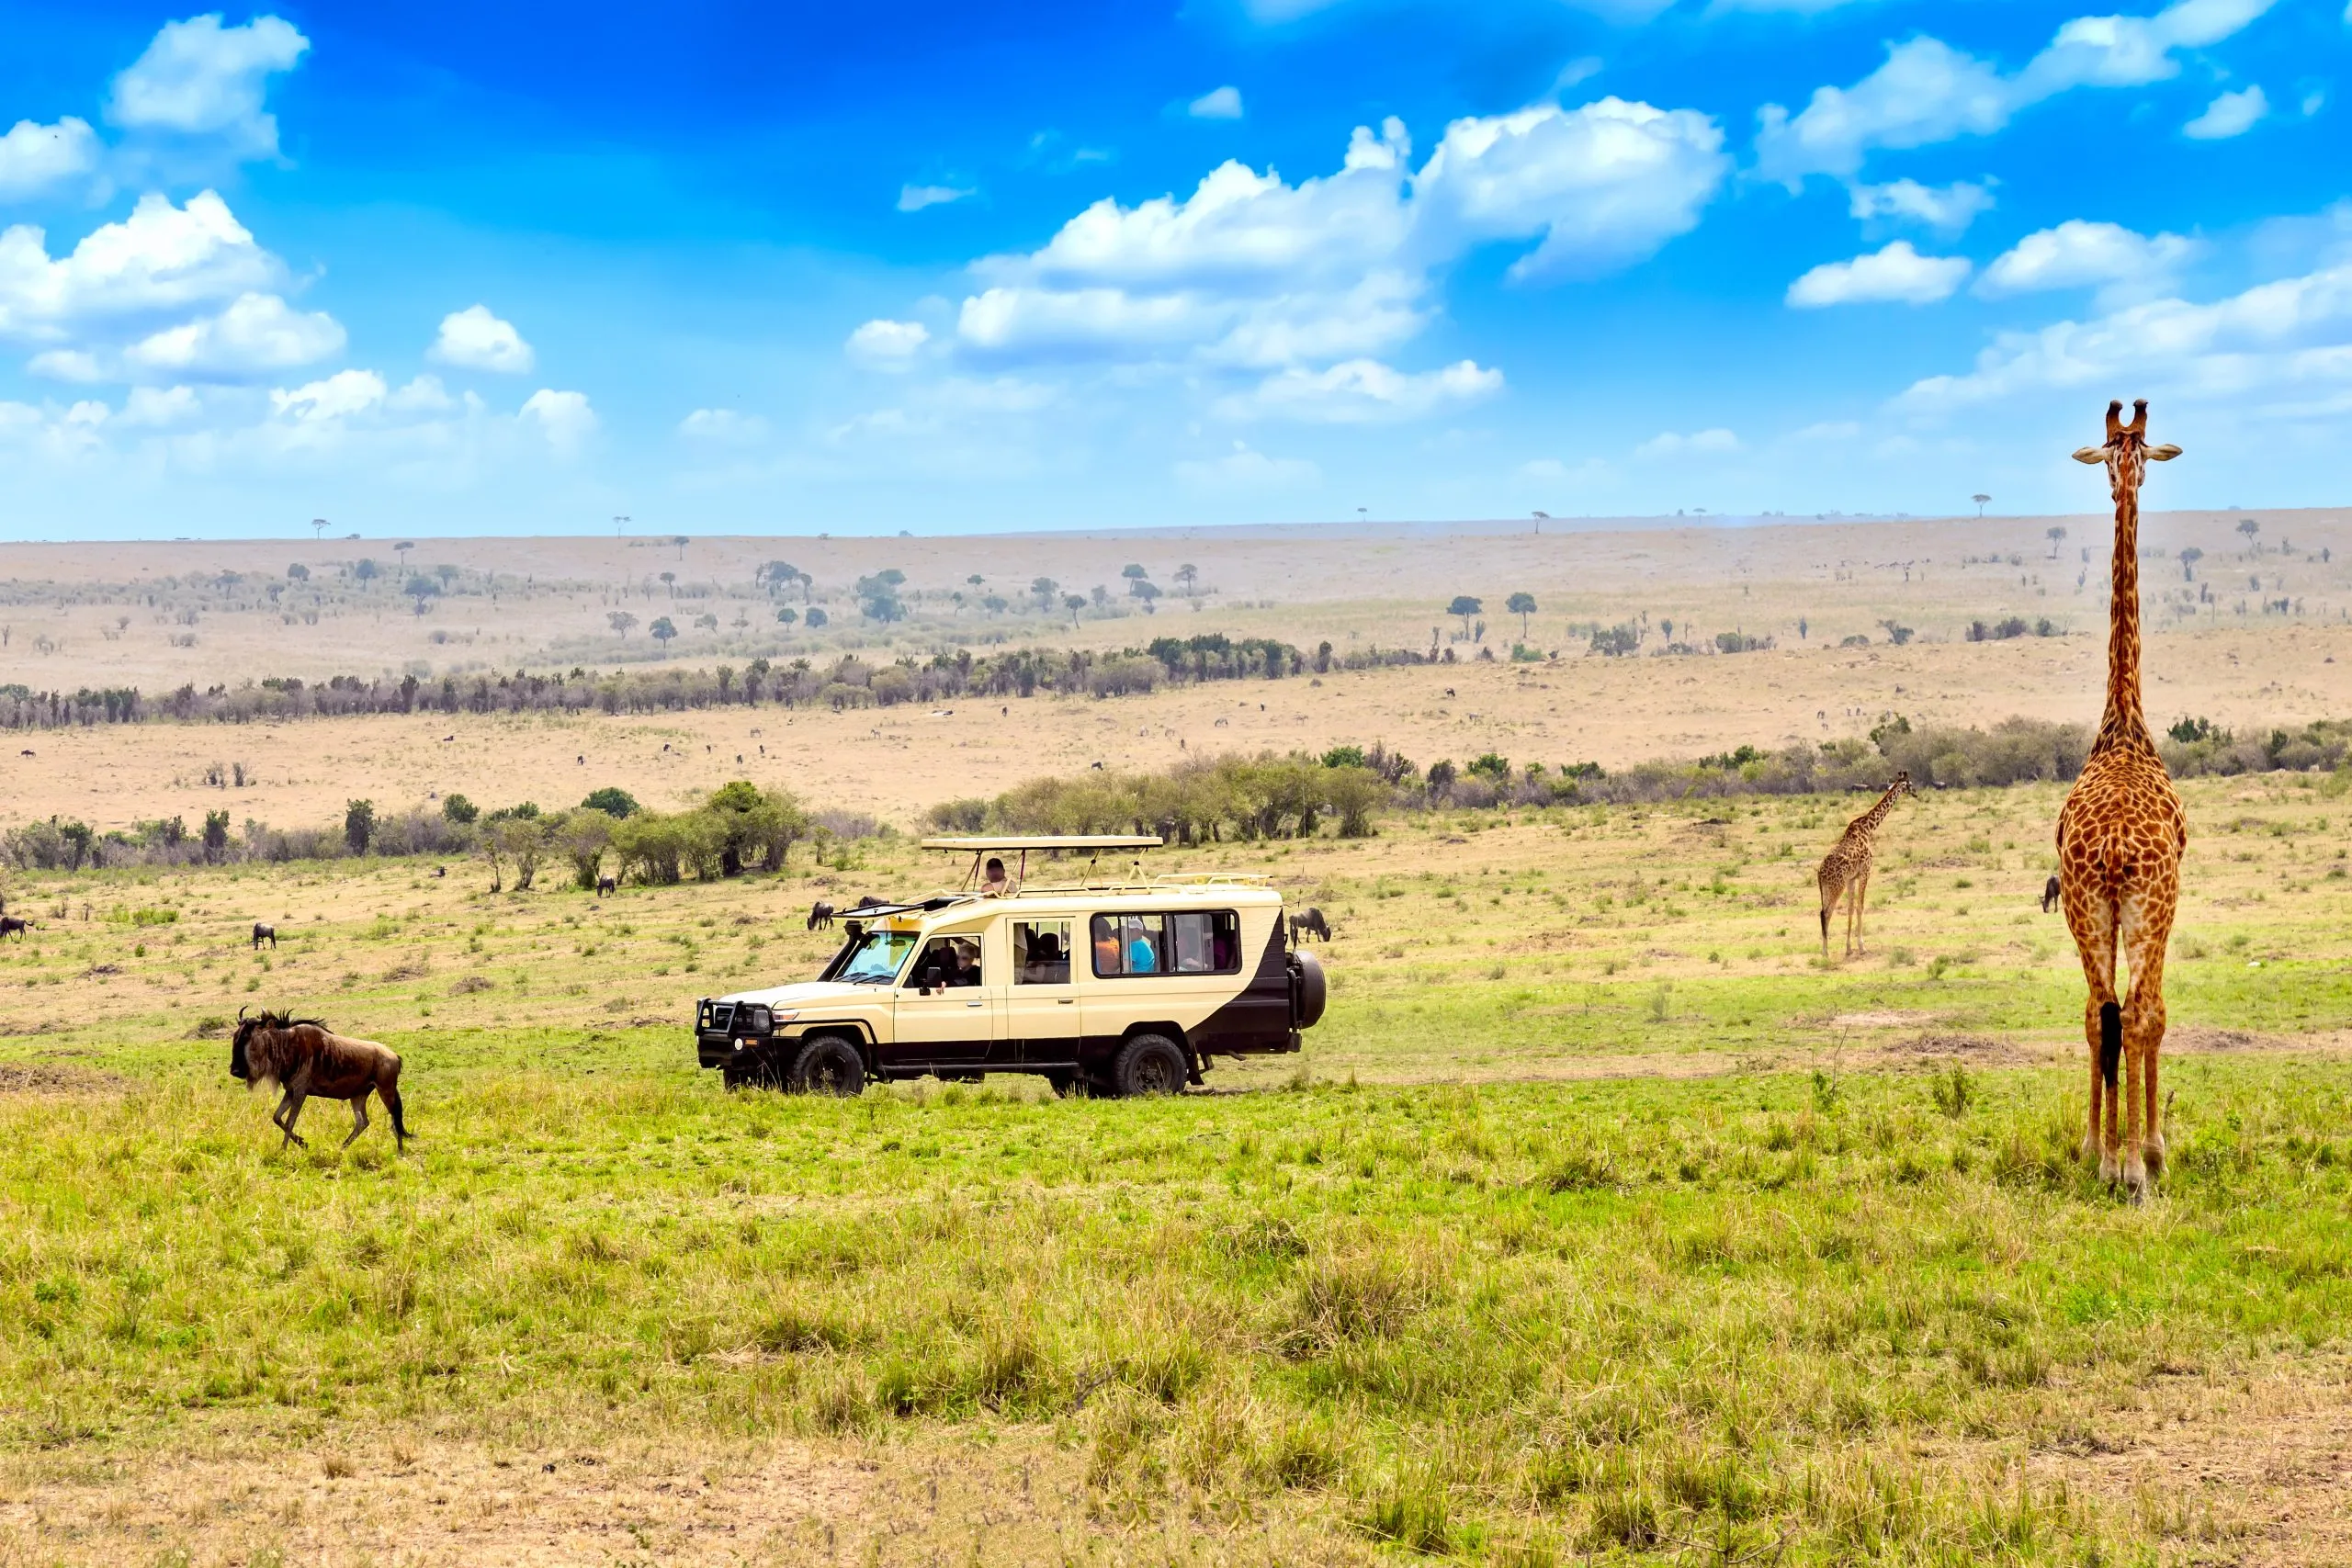 Vild giraf og gnu nær safaribil i Masai Mara National Park, Kenya. Safari-koncept. Afrikansk rejselandskab